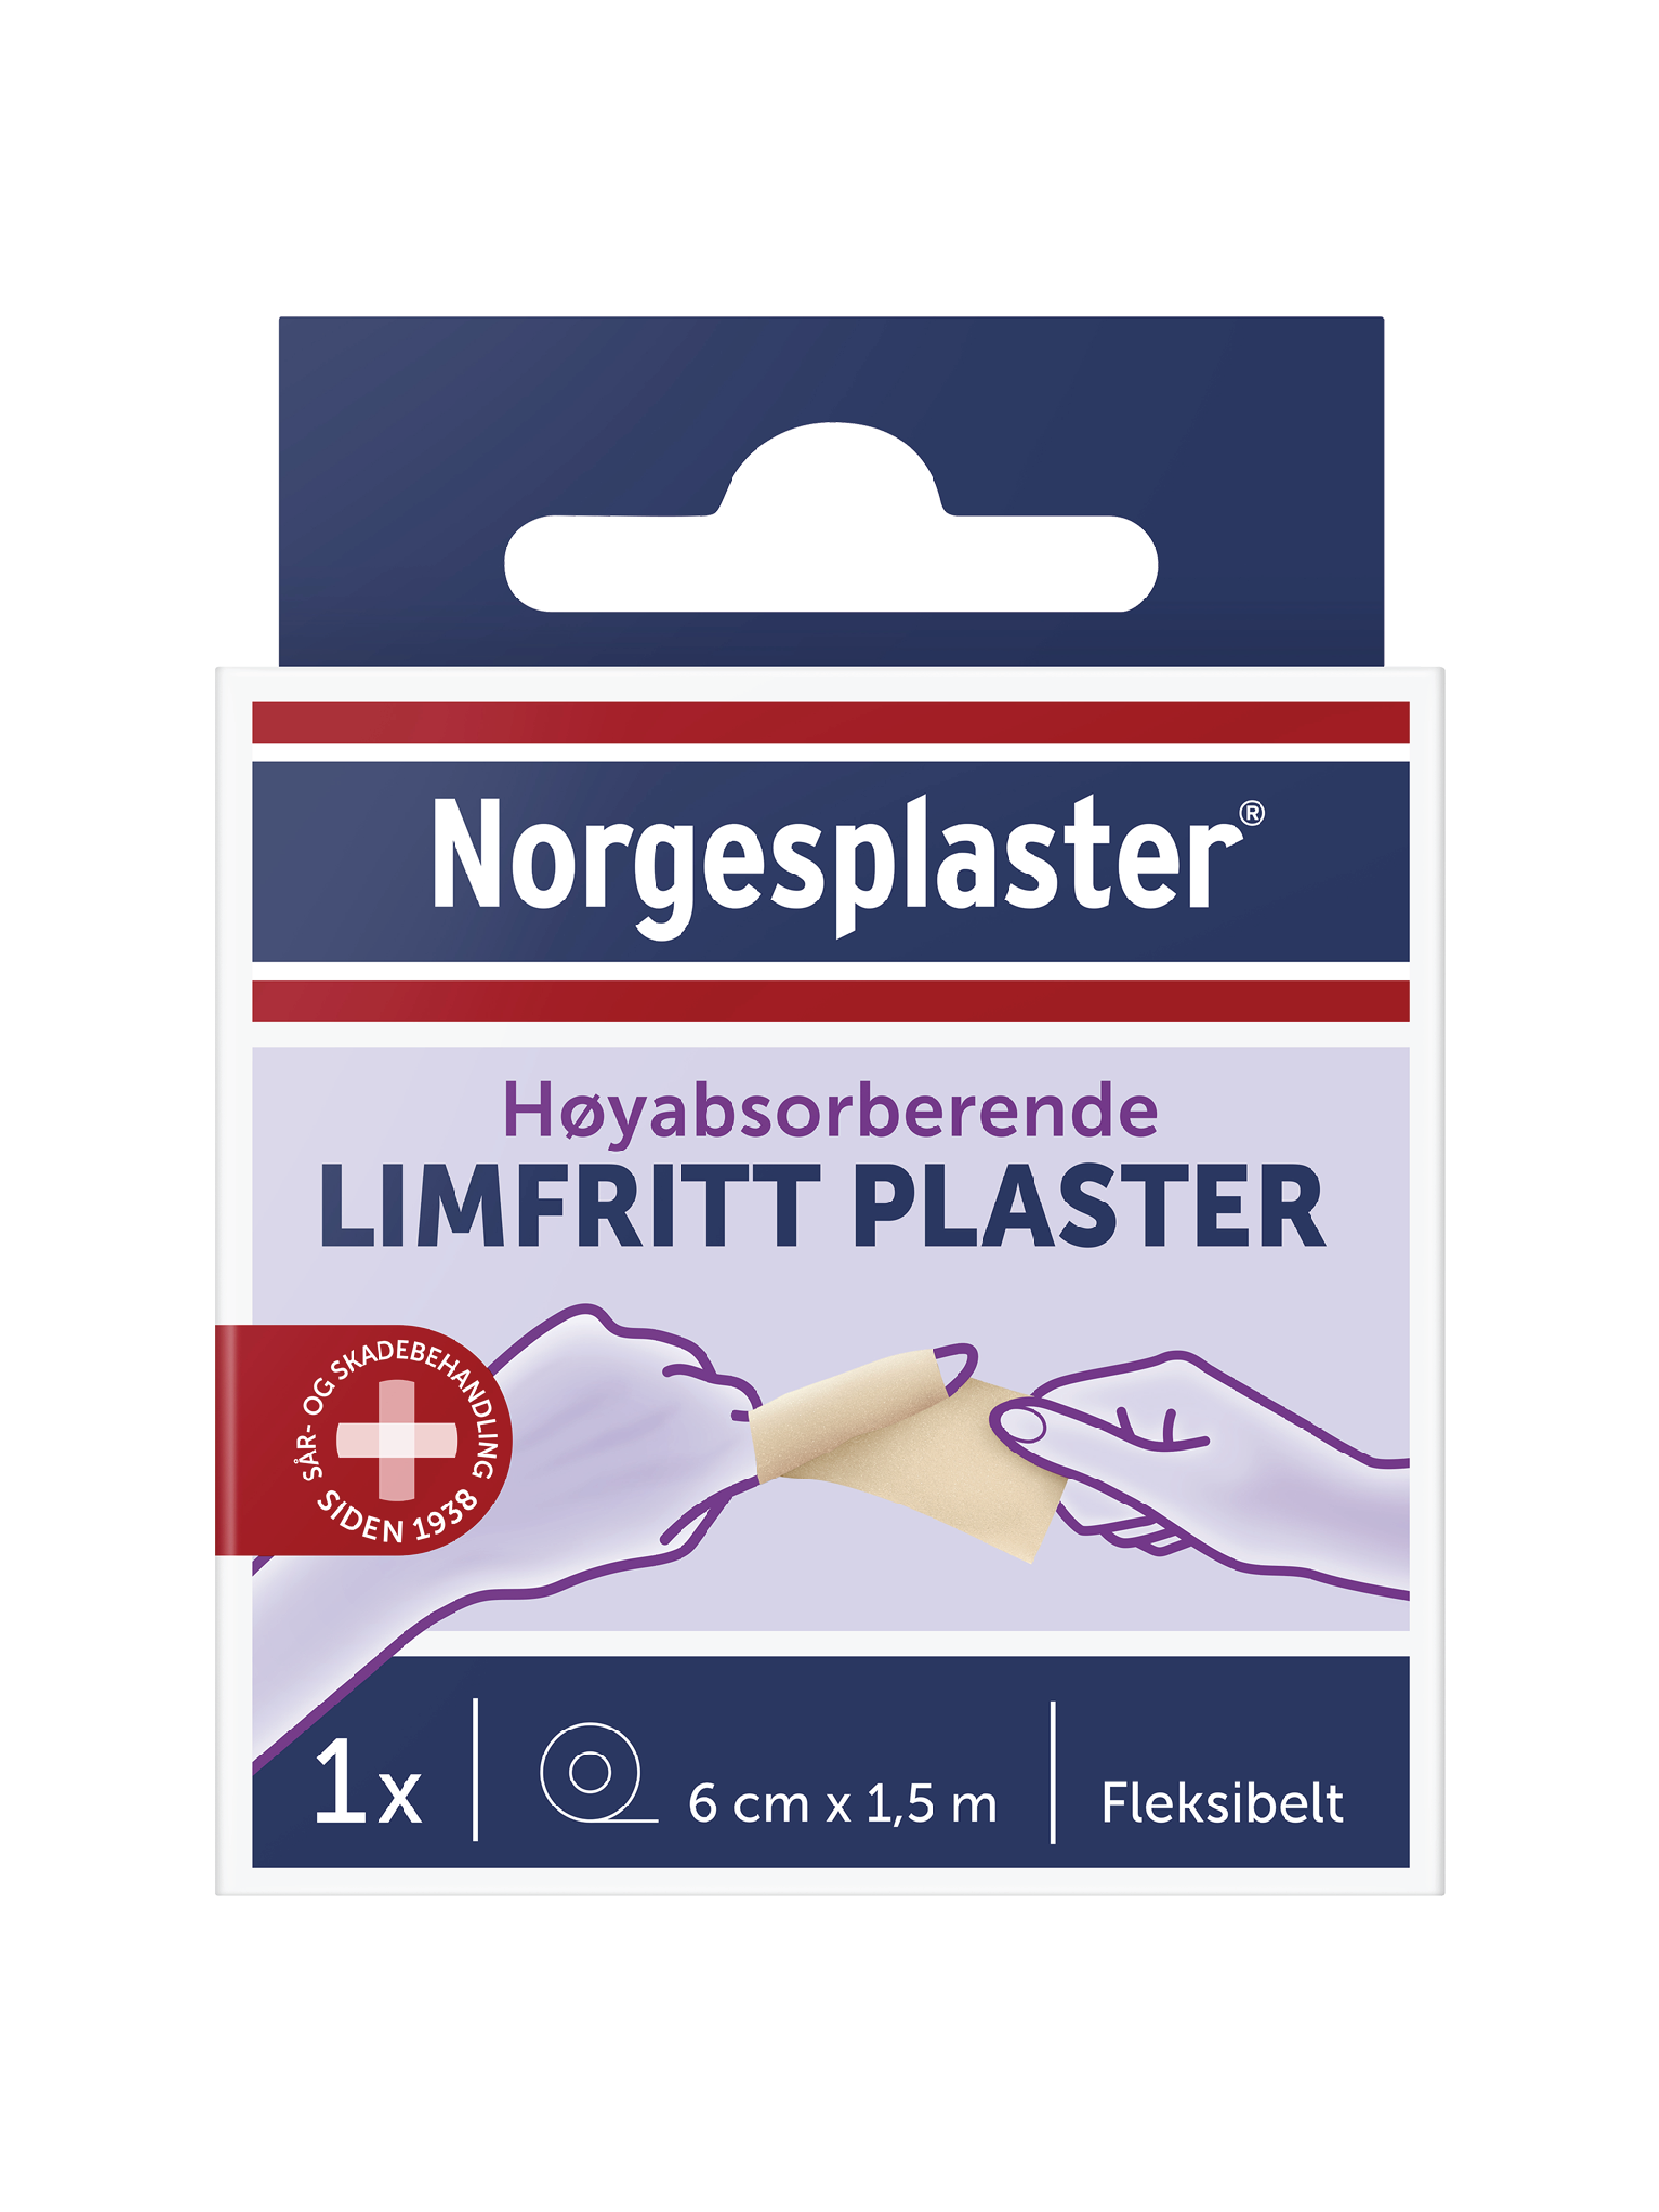 Norgesplaster Limfritt plaster, 6cm x 1,5m, 1 stk.